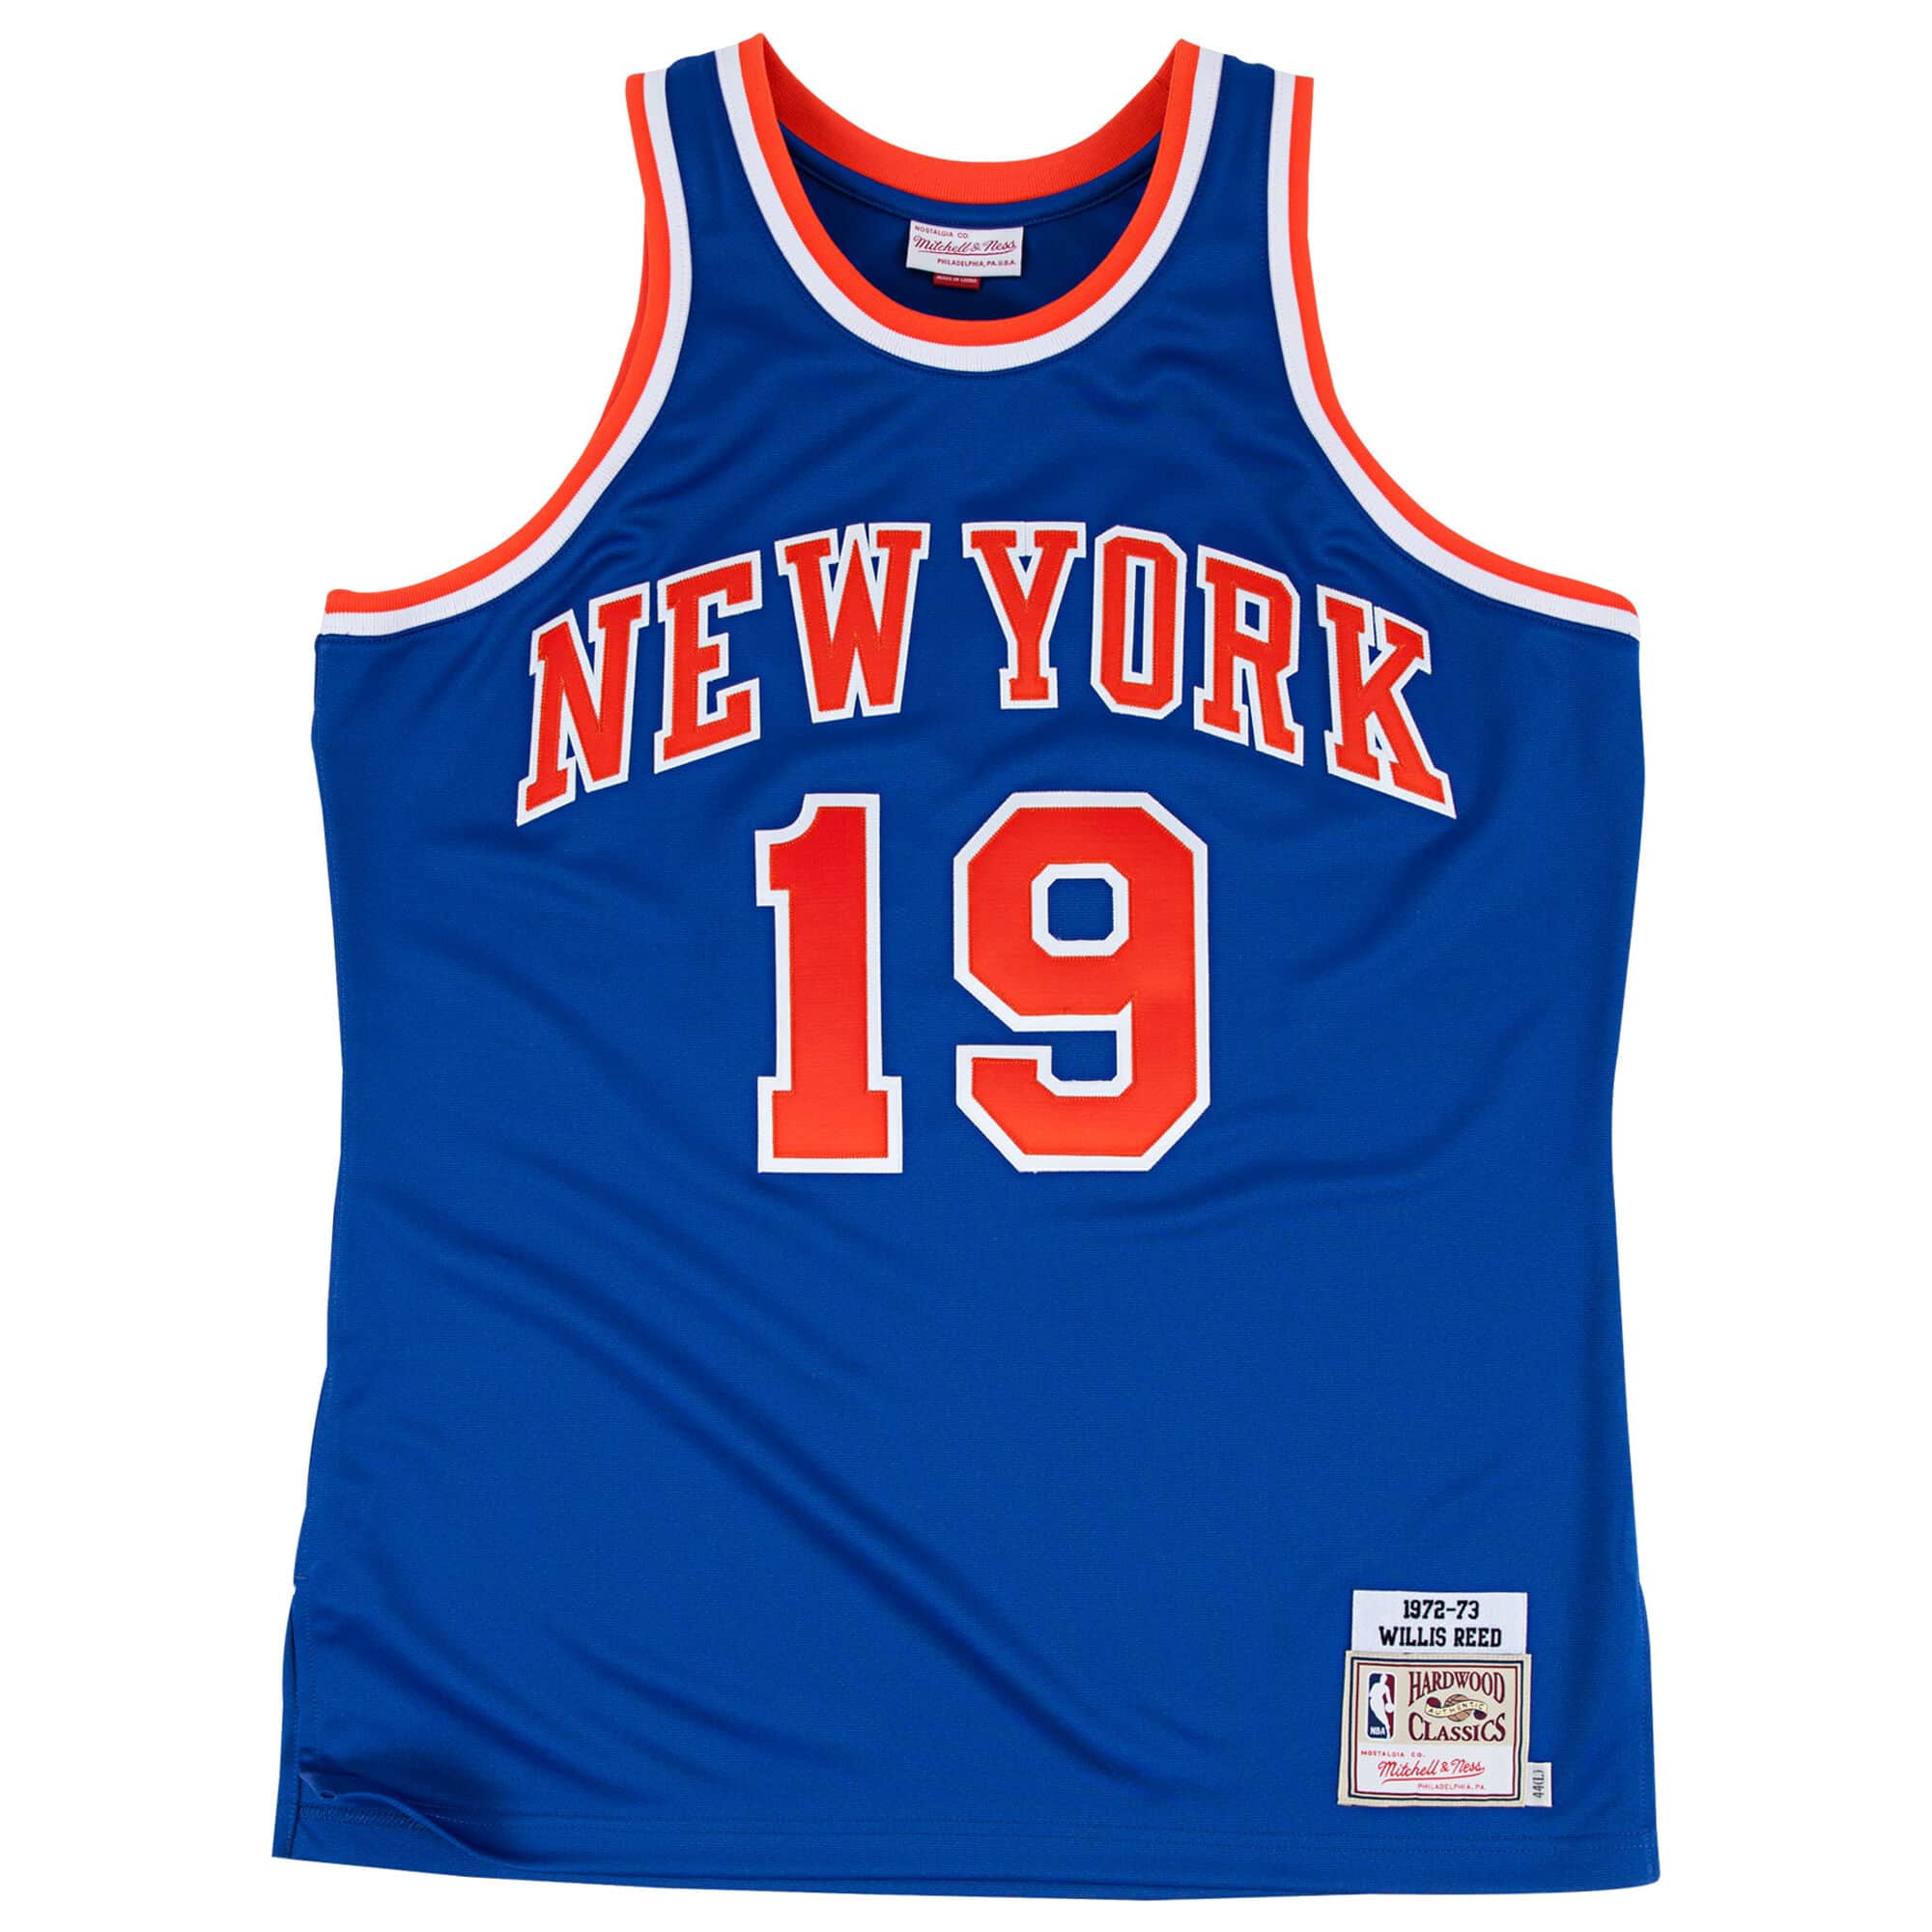 Willis Reed 1972-73 Jersey New York Knicks